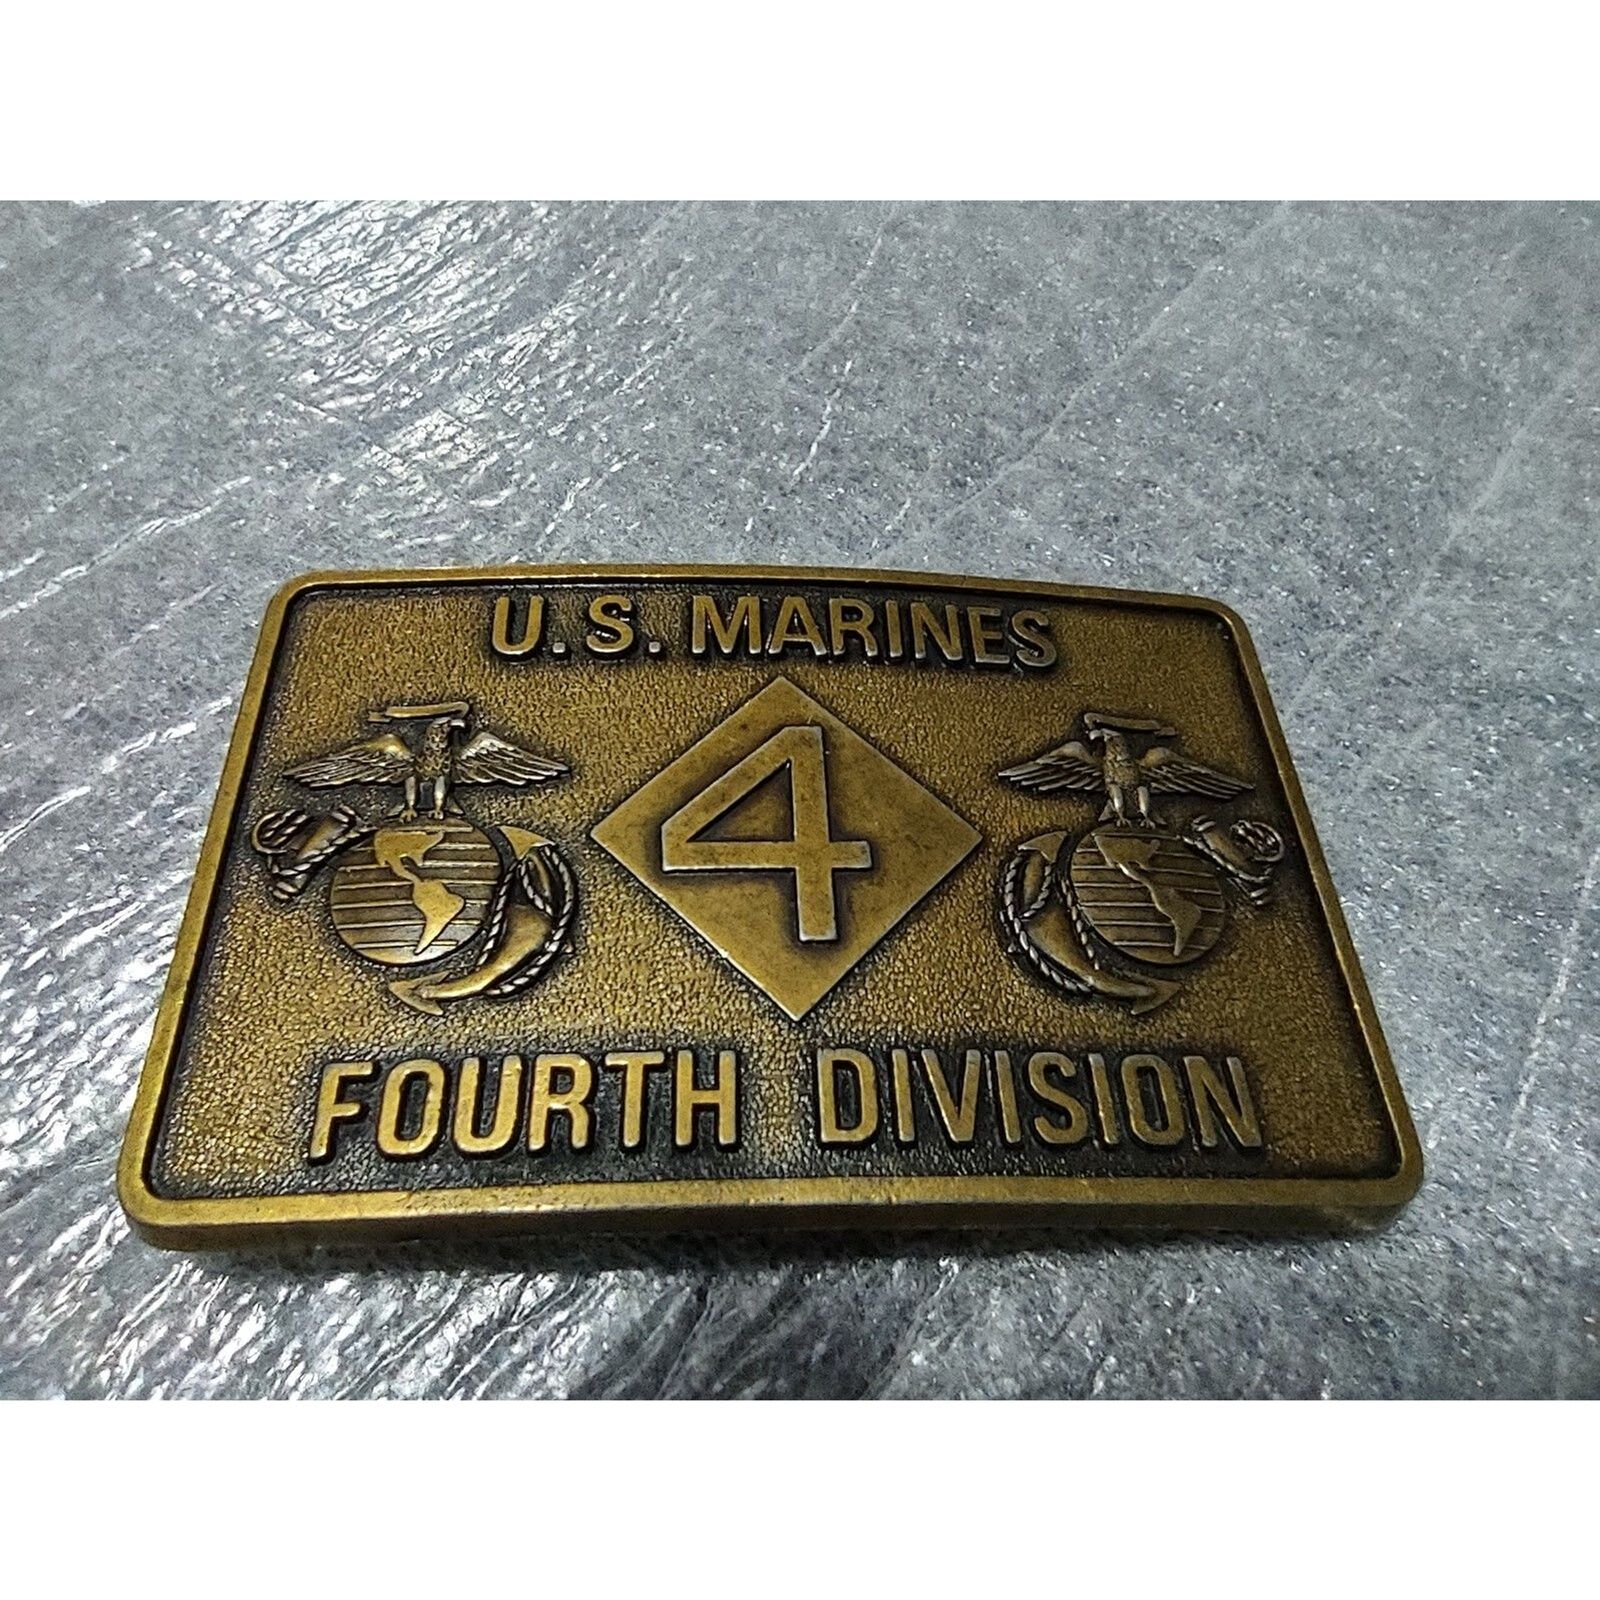 U.S. Marines 4th Division Belt Buckle